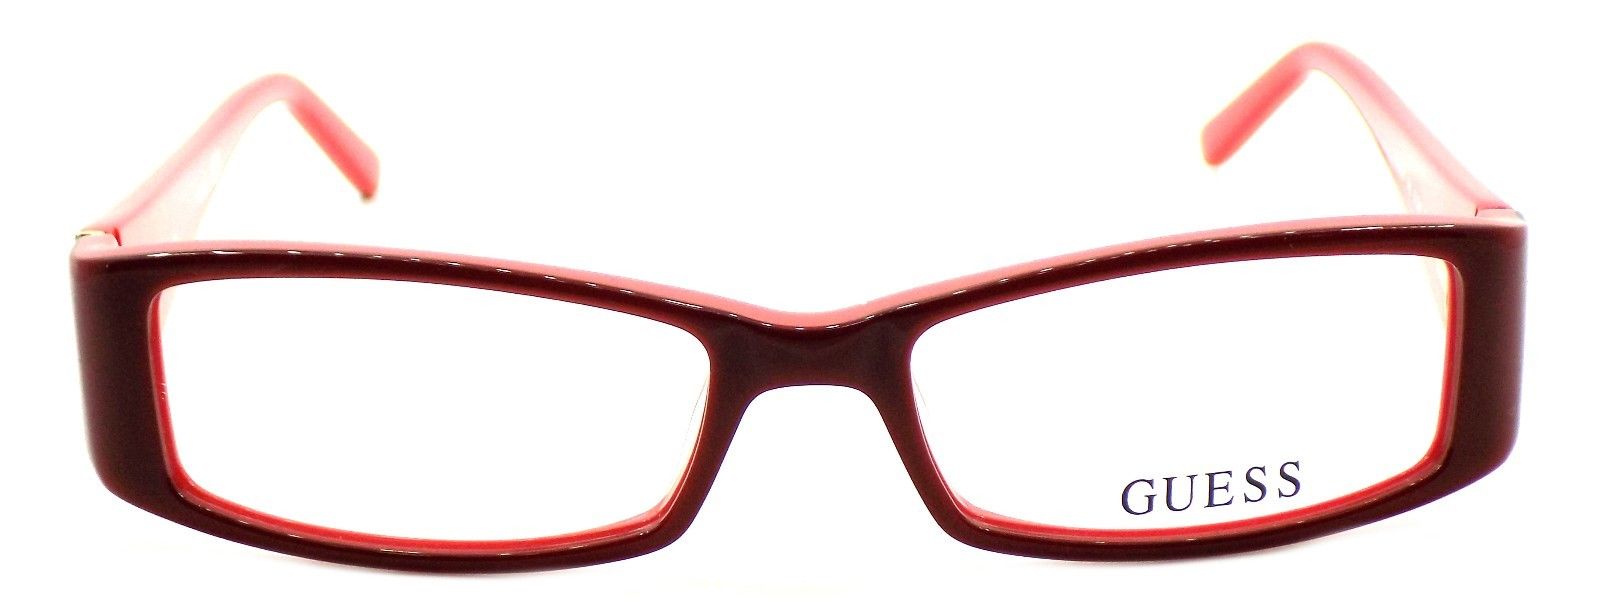 2-GUESS GU2537 066 Women's Plastic Eyeglasses Frames 51-16-135 Red + CASE-664689800544-IKSpecs